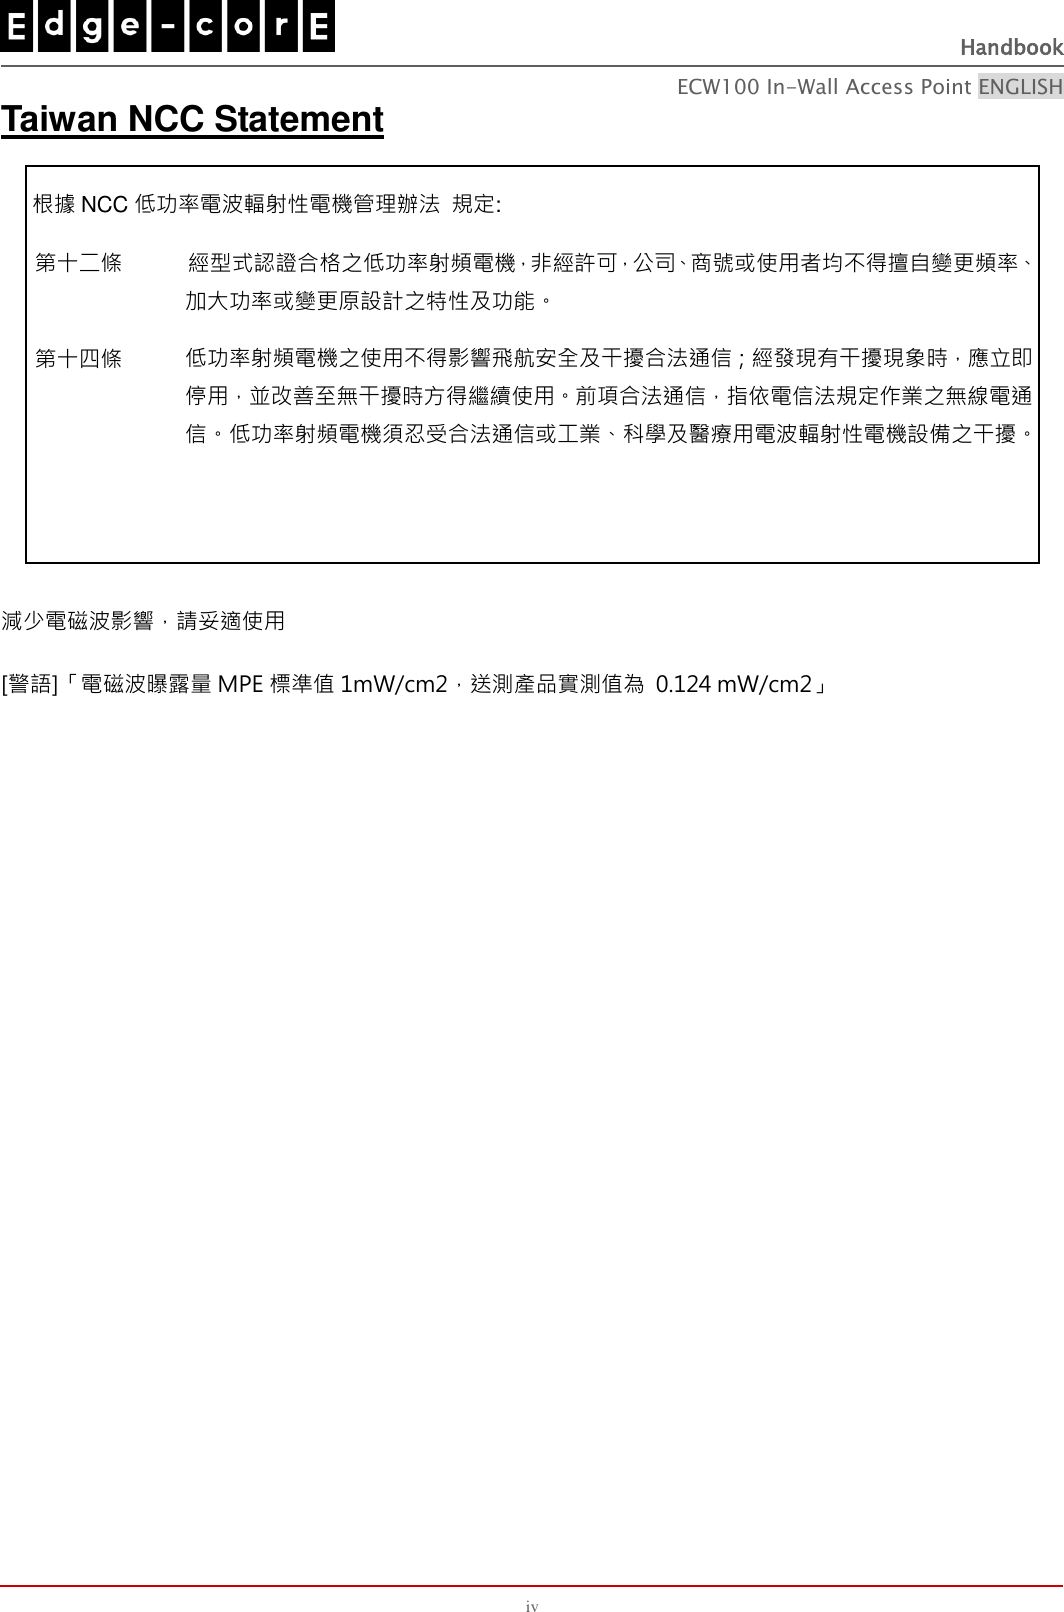 Handbook ECW100 In-Wall Access Point ENGLISH iv Taiwan NCC Statement 根據 NCC 低功率電波輻射性電機管理辦法 規定: 第十二條 經型式認證合格之低功率射頻電機，非經許可，公司、商號或使用者均不得擅自變更頻率、加大功率或變更原設計之特性及功能。 第十四條 低功率射頻電機之使用不得影響飛航安全及干擾合法通信；經發現有干擾現象時，應立即停用，並改善至無干擾時方得繼續使用。前項合法通信，指依電信法規定作業之無線電通信。低功率射頻電機須忍受合法通信或工業、科學及醫療用電波輻射性電機設備之干擾。 減少電磁波影響，請妥適使用 [警語]「電磁波曝露量 MPE 標準值 1mW/cm2，送測產品實測值為  0.124 mW/cm2」 